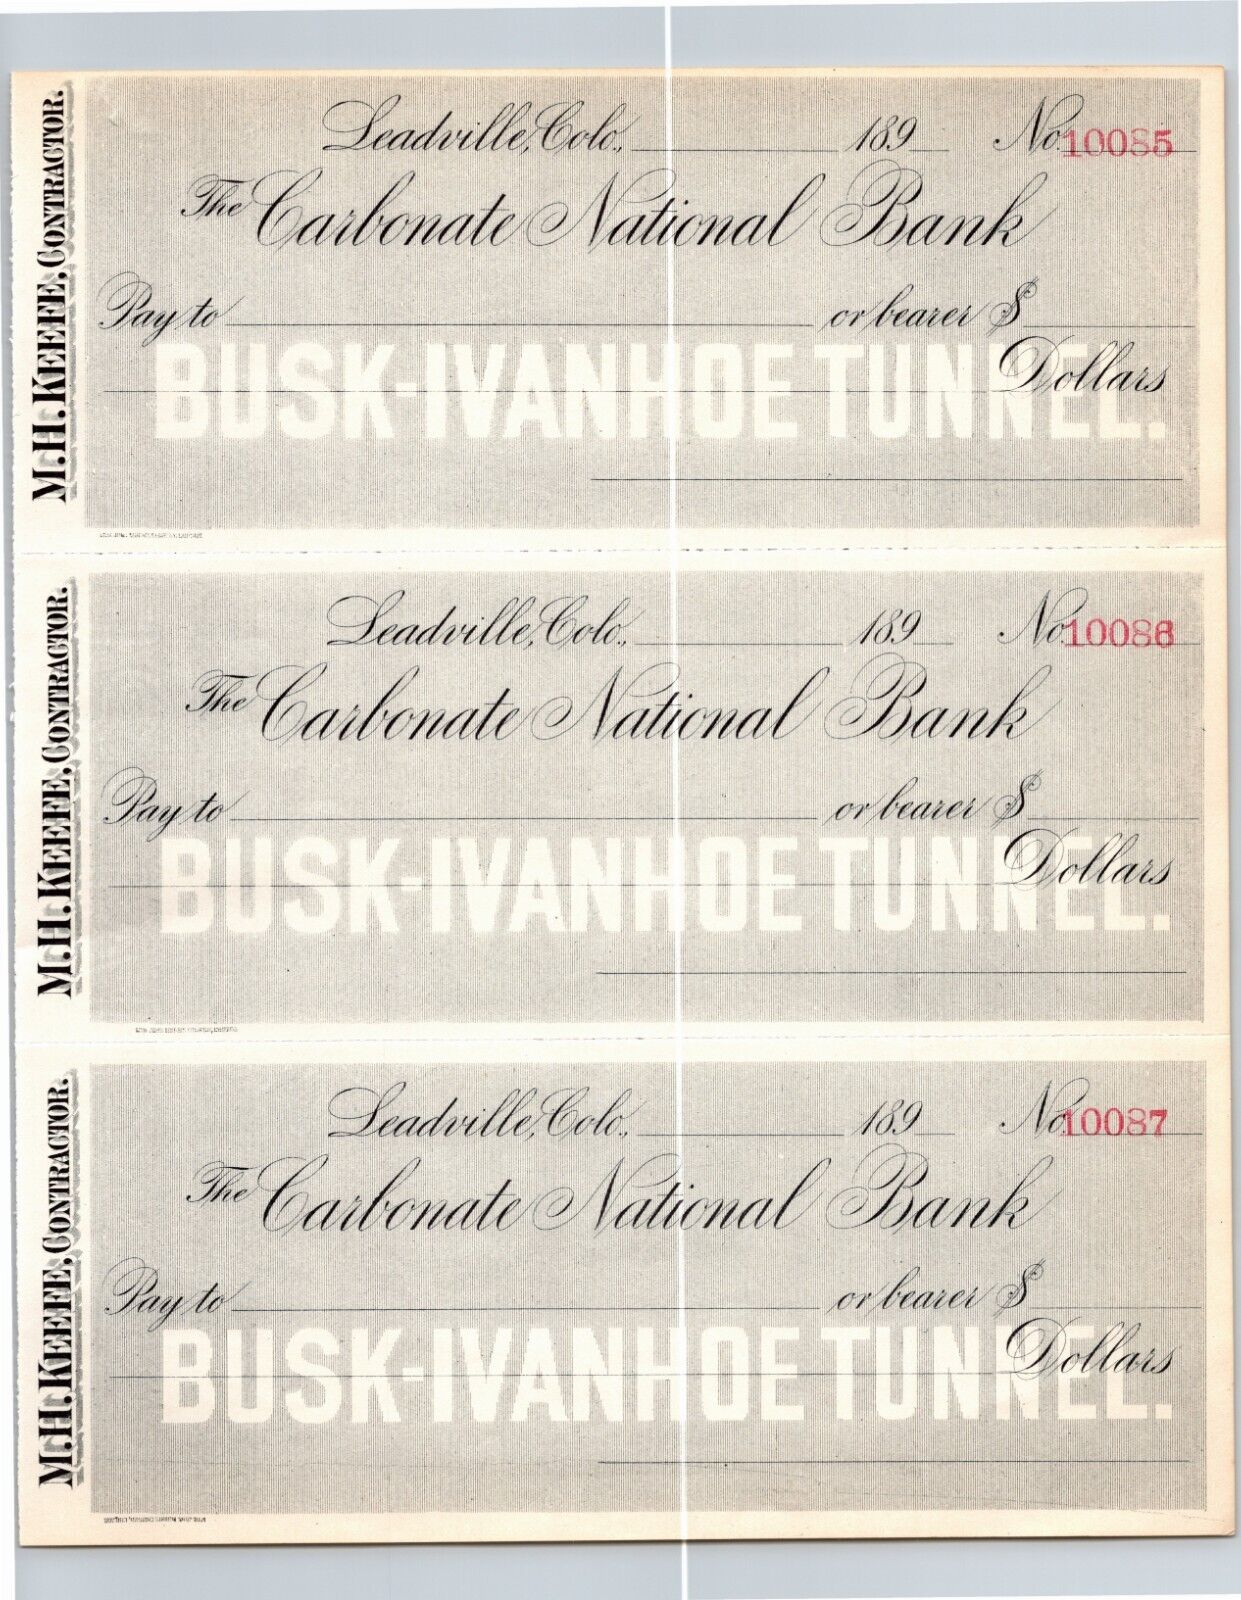 Leadville, CO - M.H. Keene Contractor Busk-Ivanhoe Tunnel Bank Check Sheet 1890